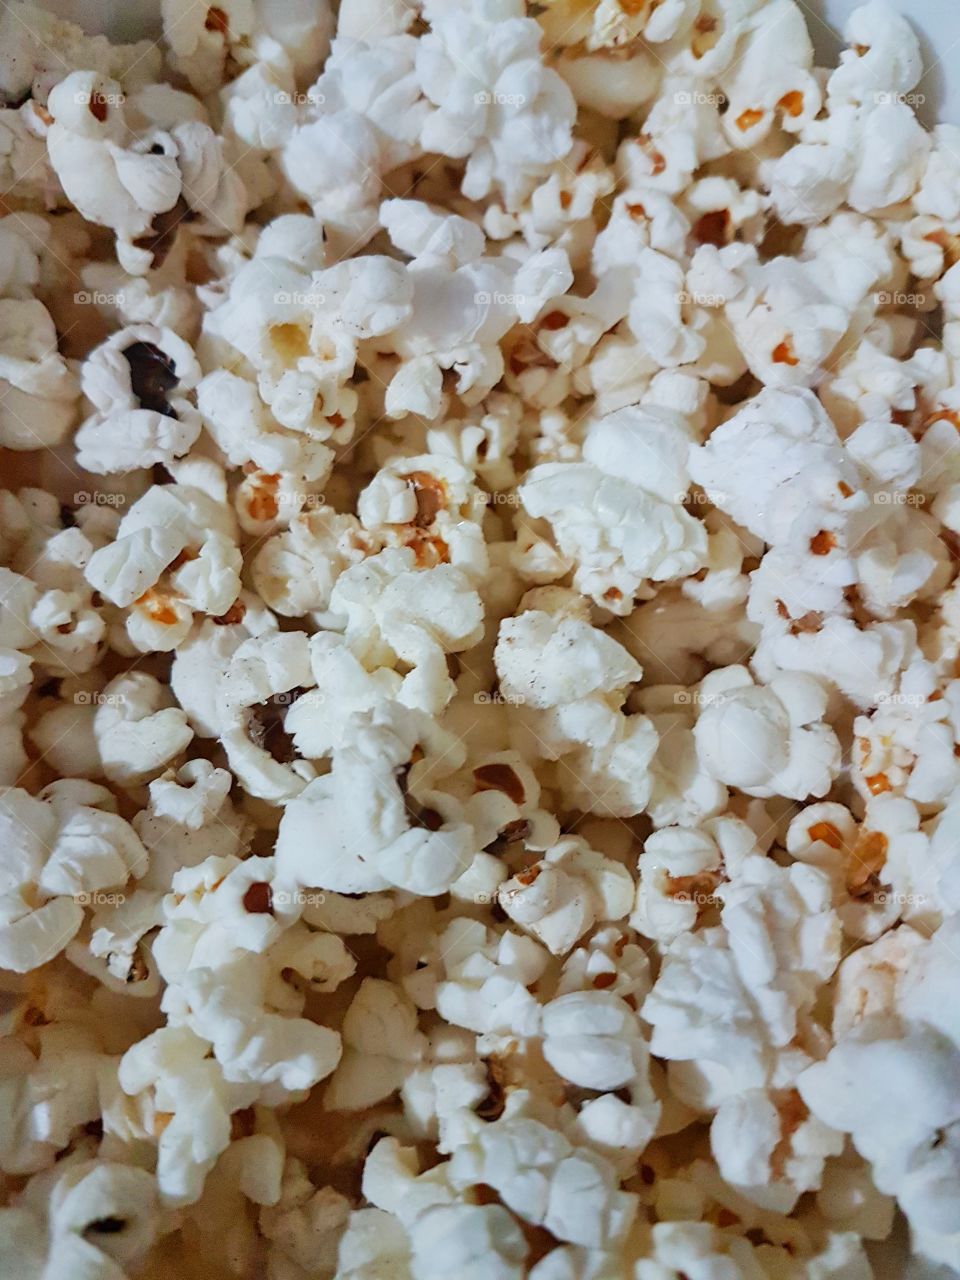 Lot of popcorn